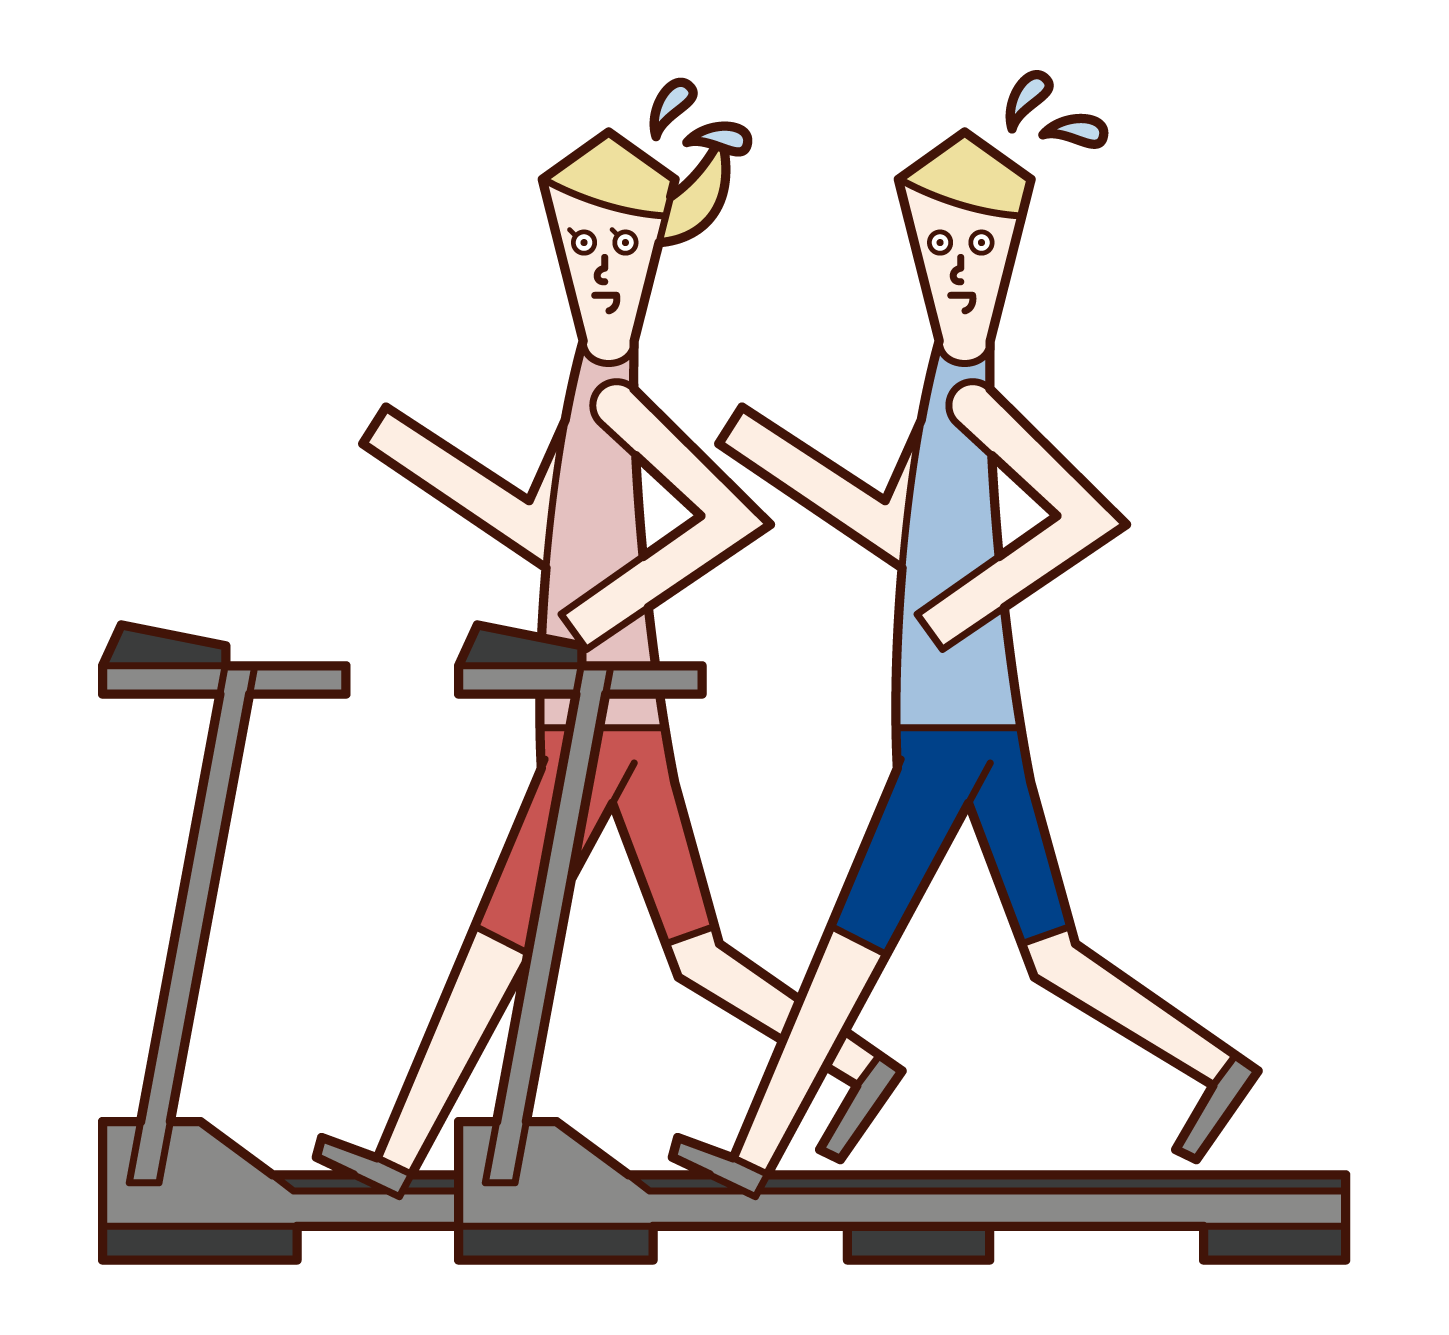 Illustration of people running on a running machine